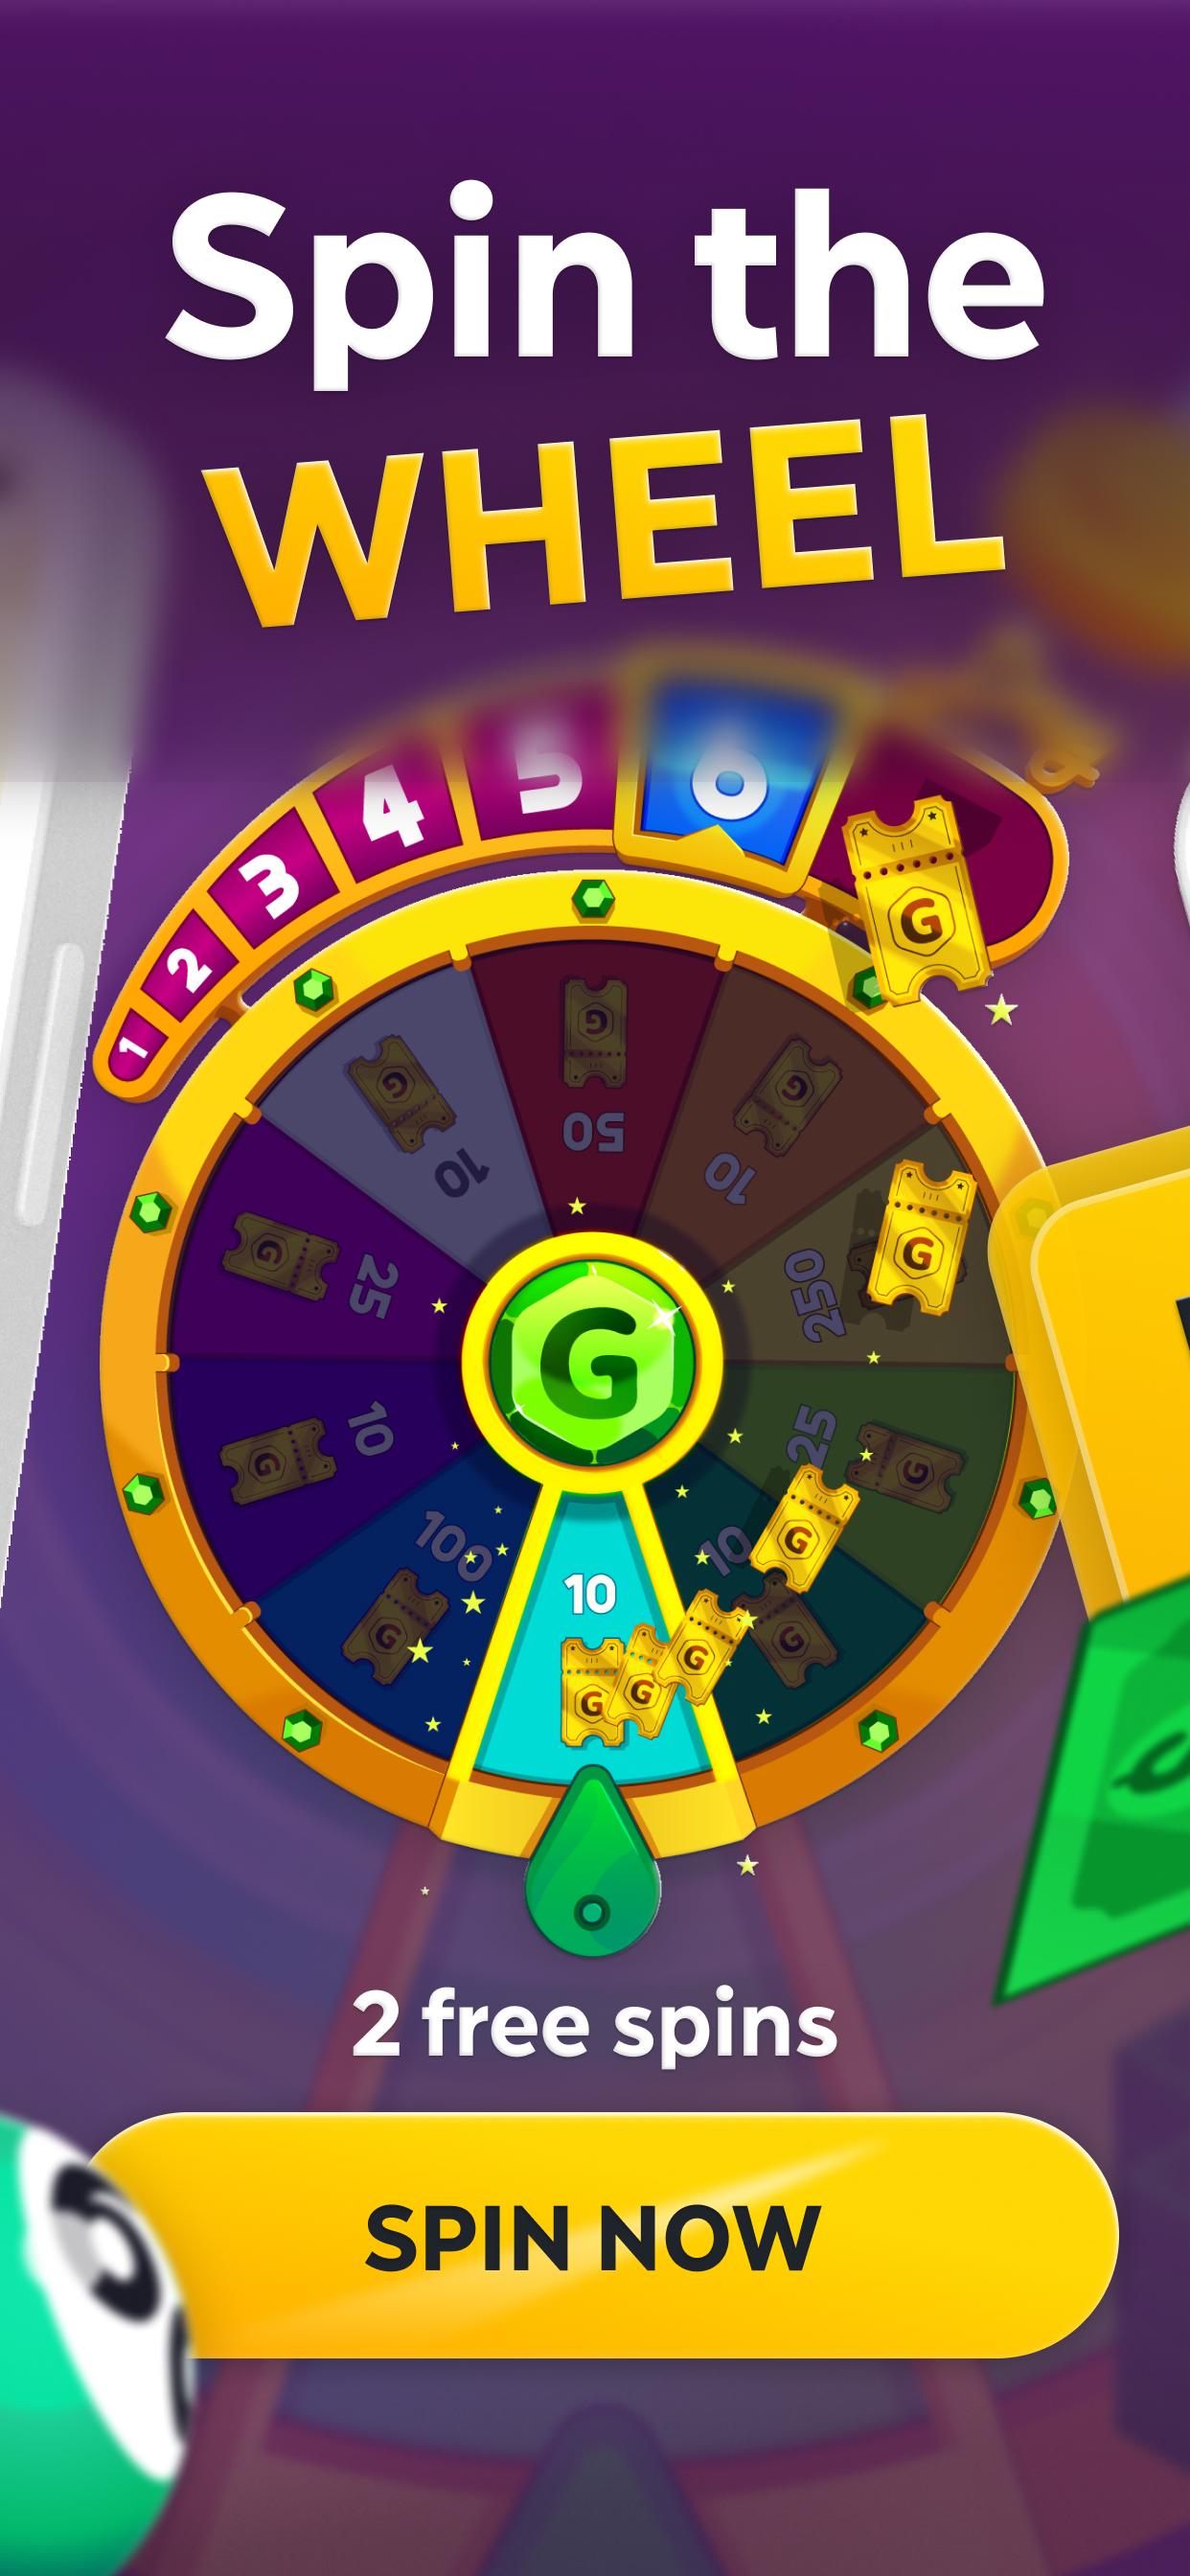 GAMEE Prizes - Play Free Games, WIN REAL CASH! 4.10.8 Screenshot 4